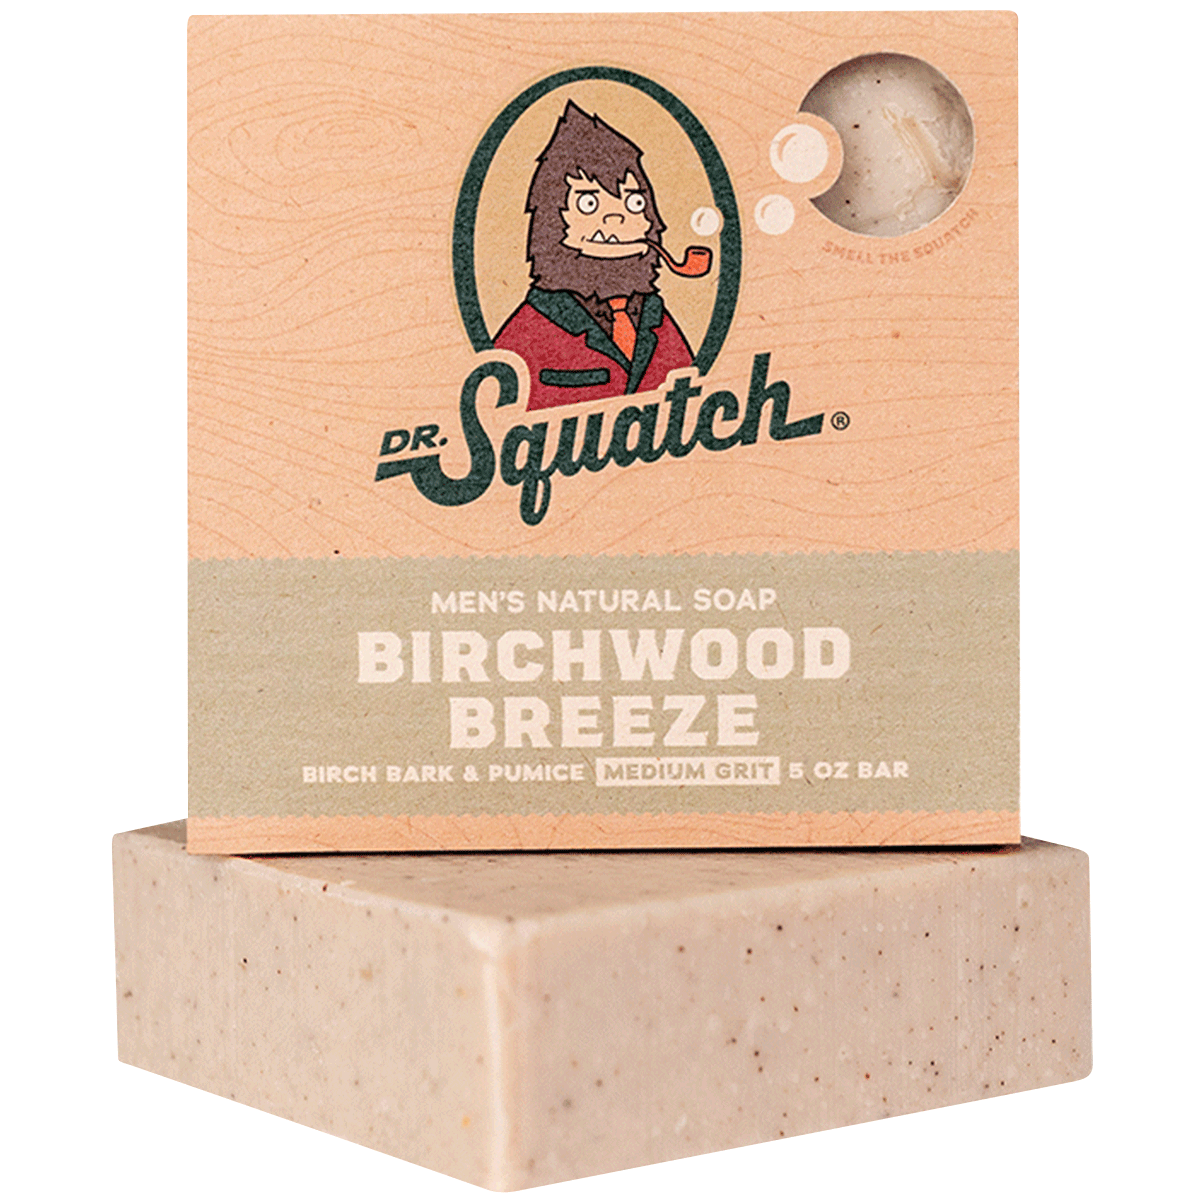 "Birchwood Breeze" Dr. Squatch Bar Soap.